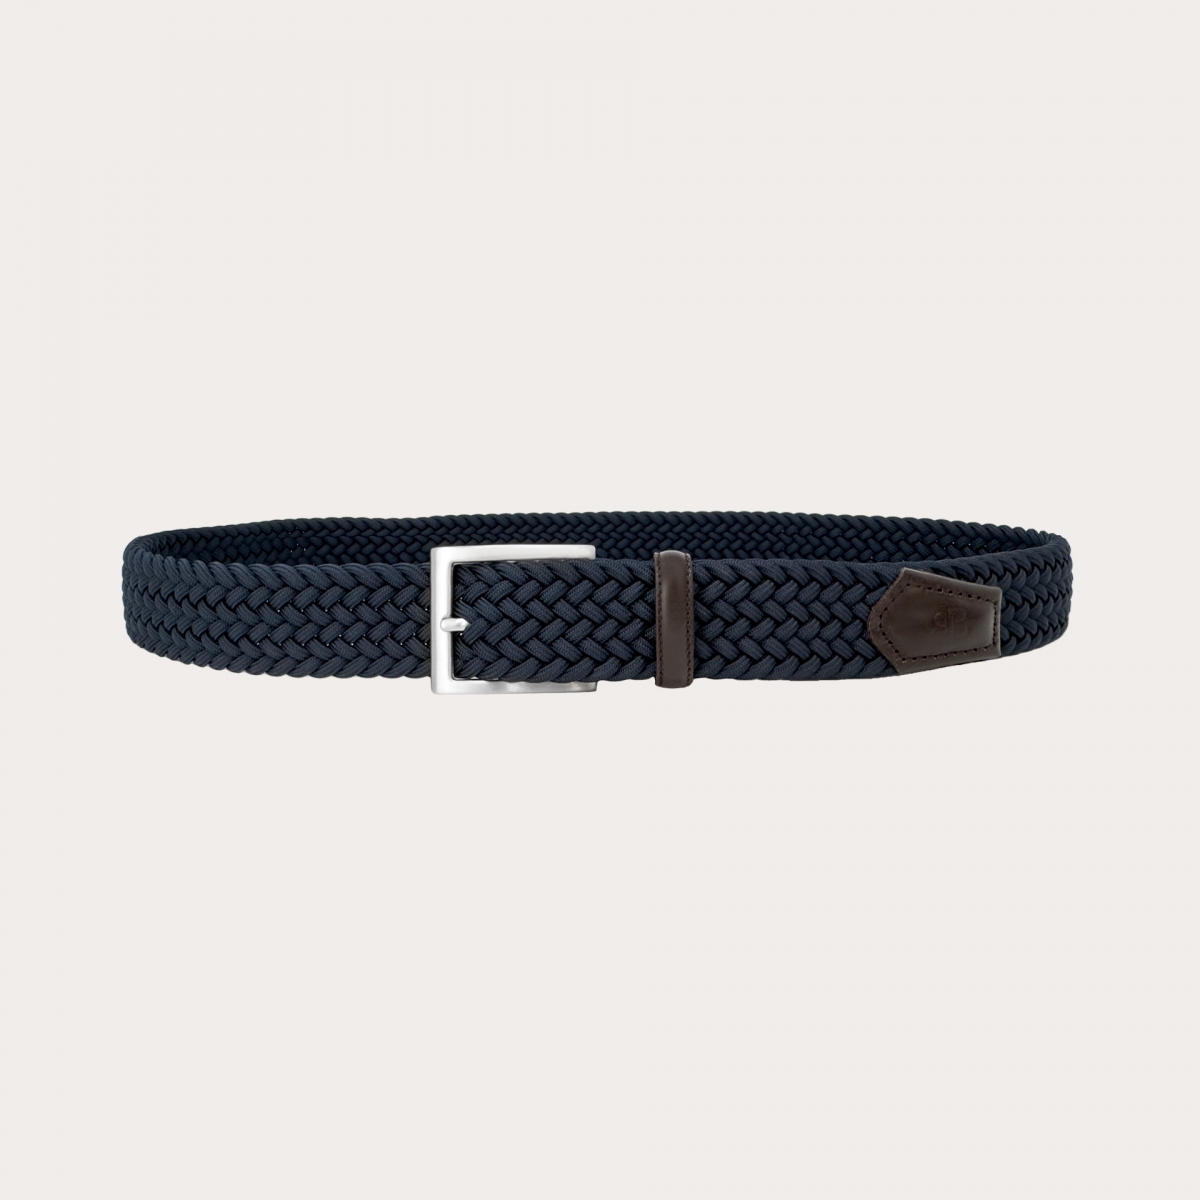 Blue braided elastic belt with dark brown leather